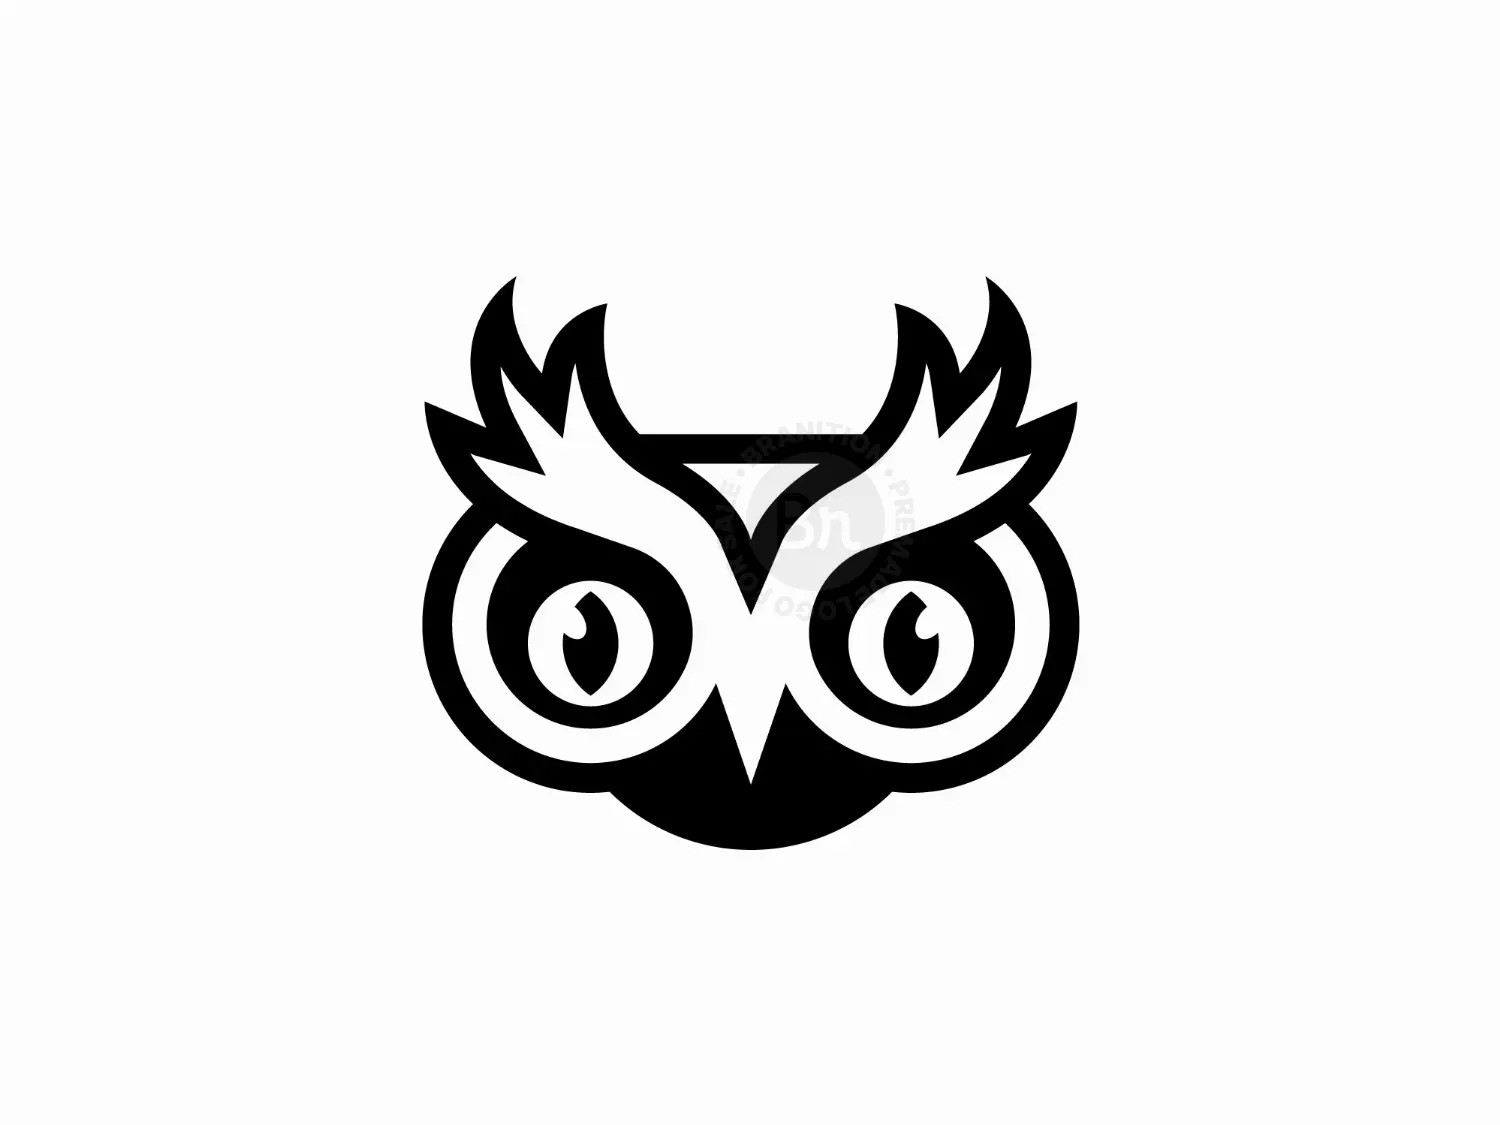 V Or M Owl Head